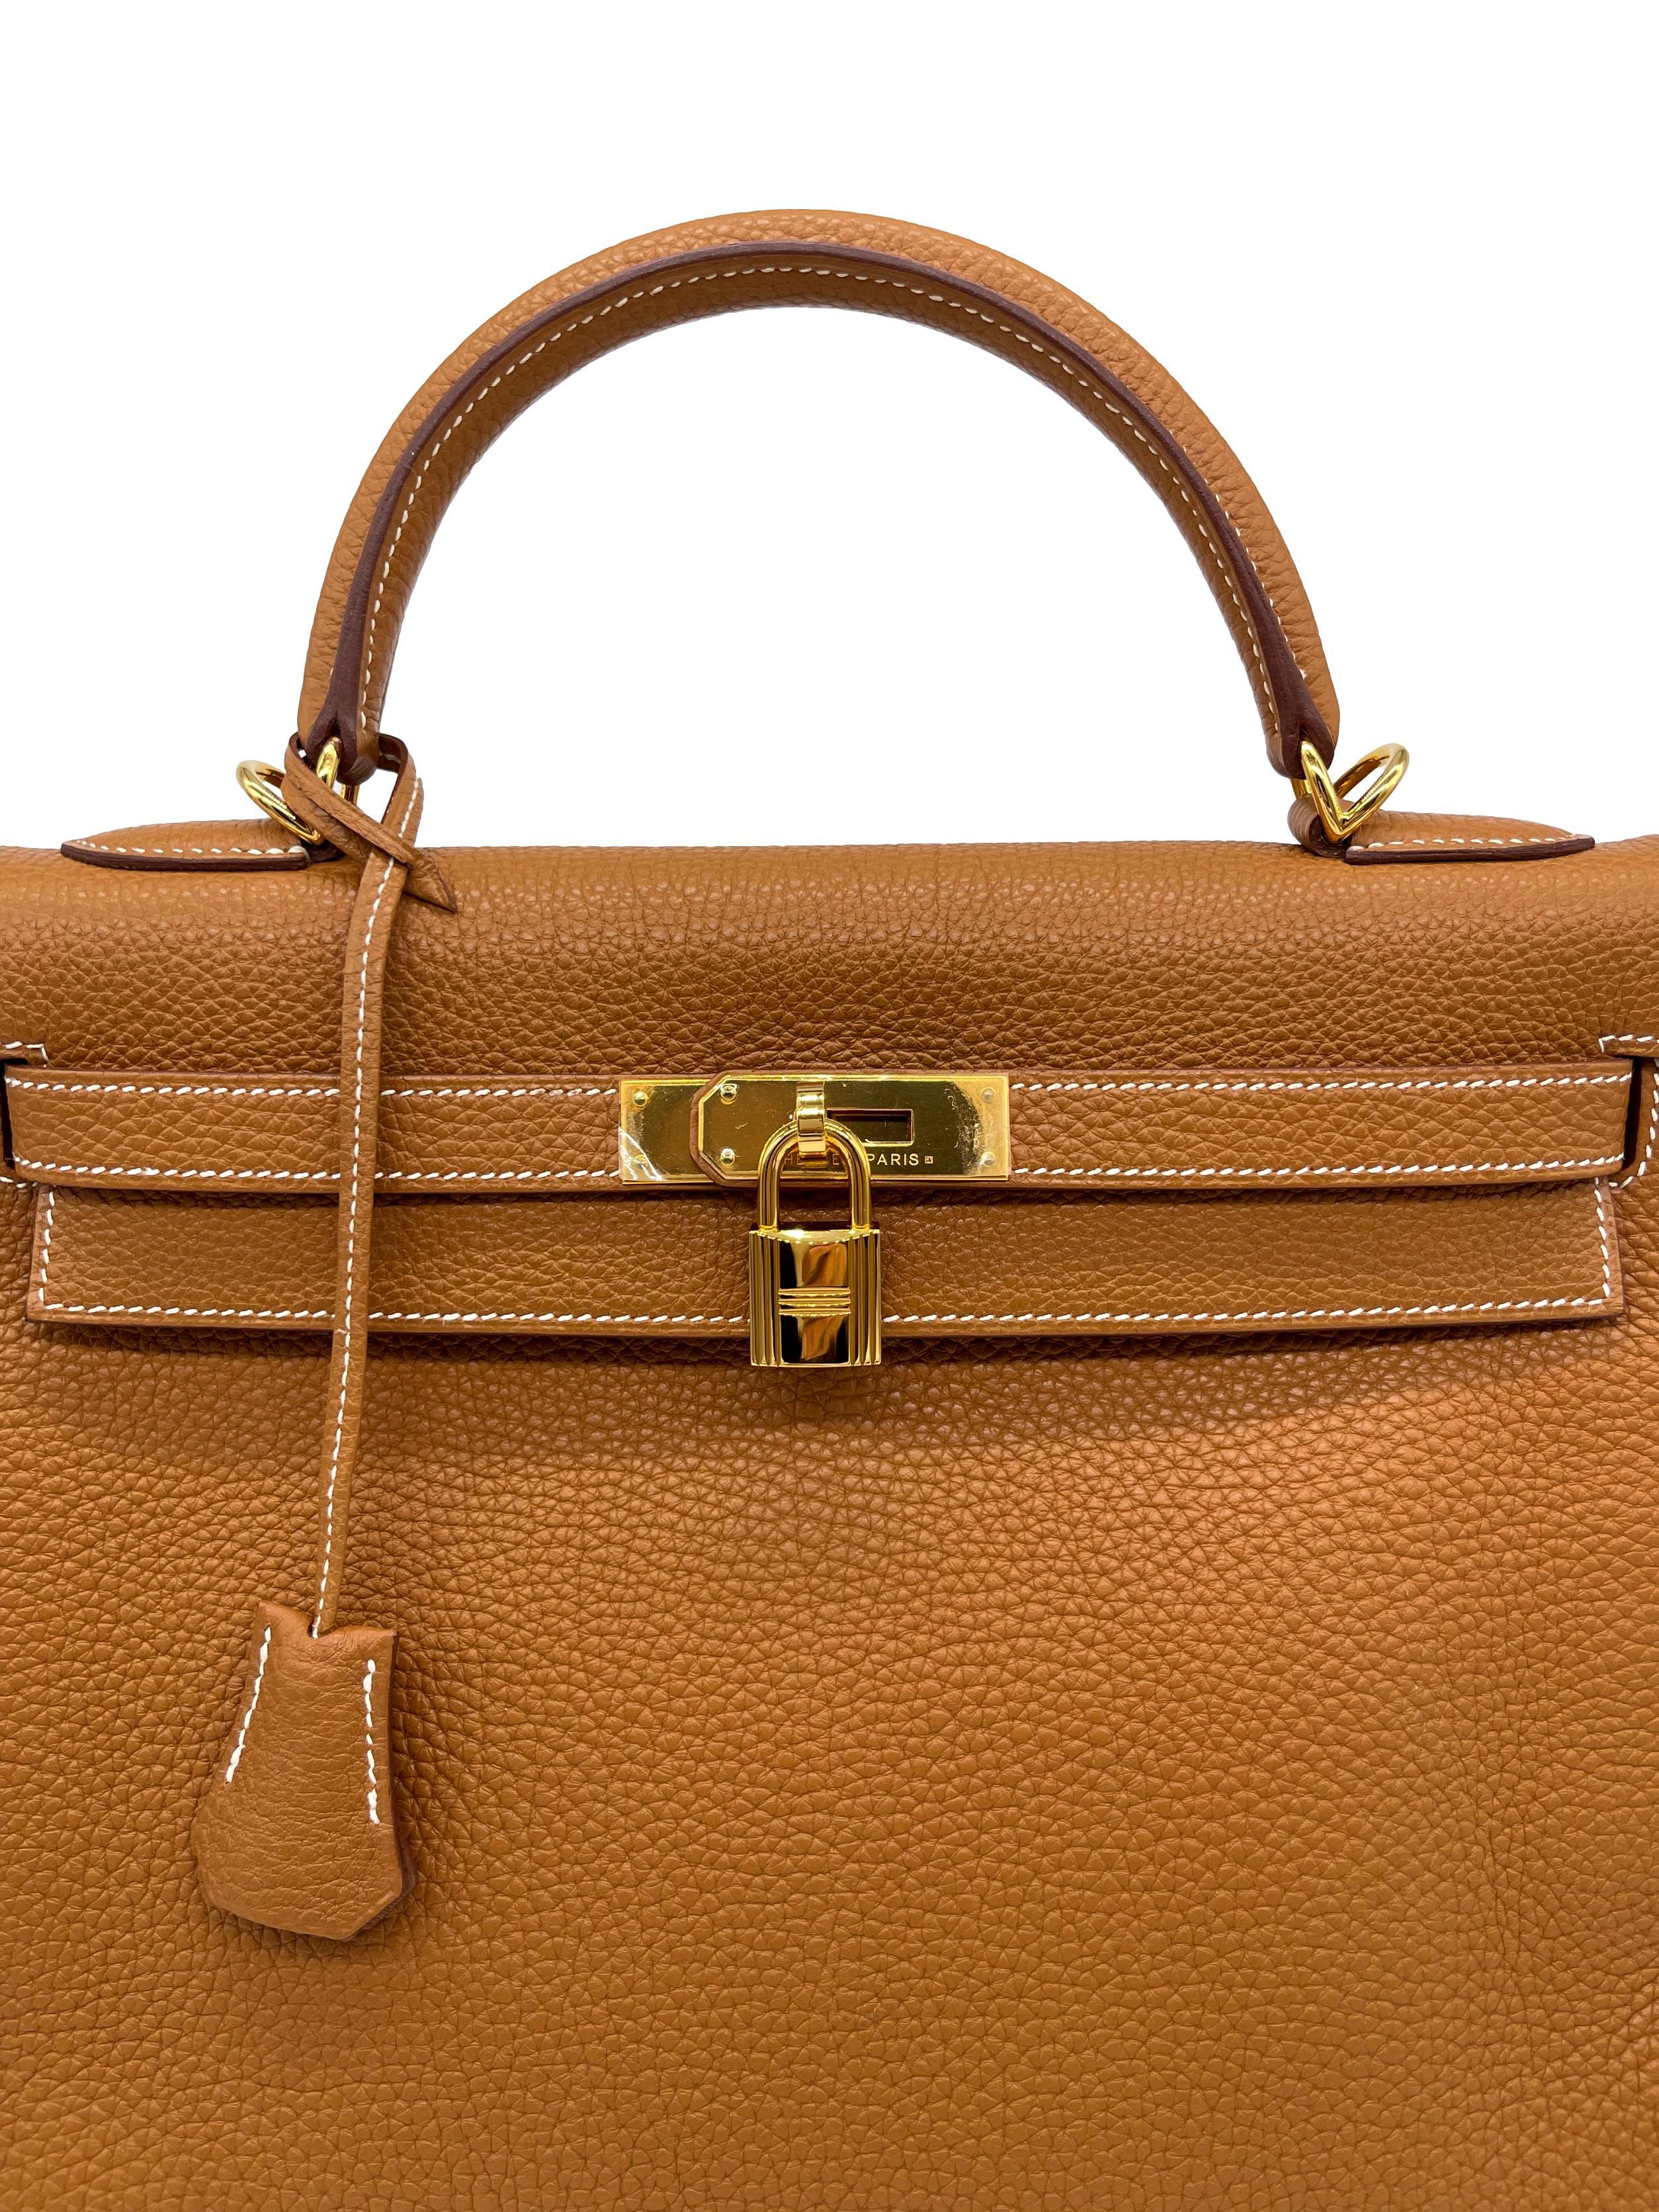 Hermès Natural Clemence Retourne Kelly Handbag with Gold Hardware 32cm, 2007. 11